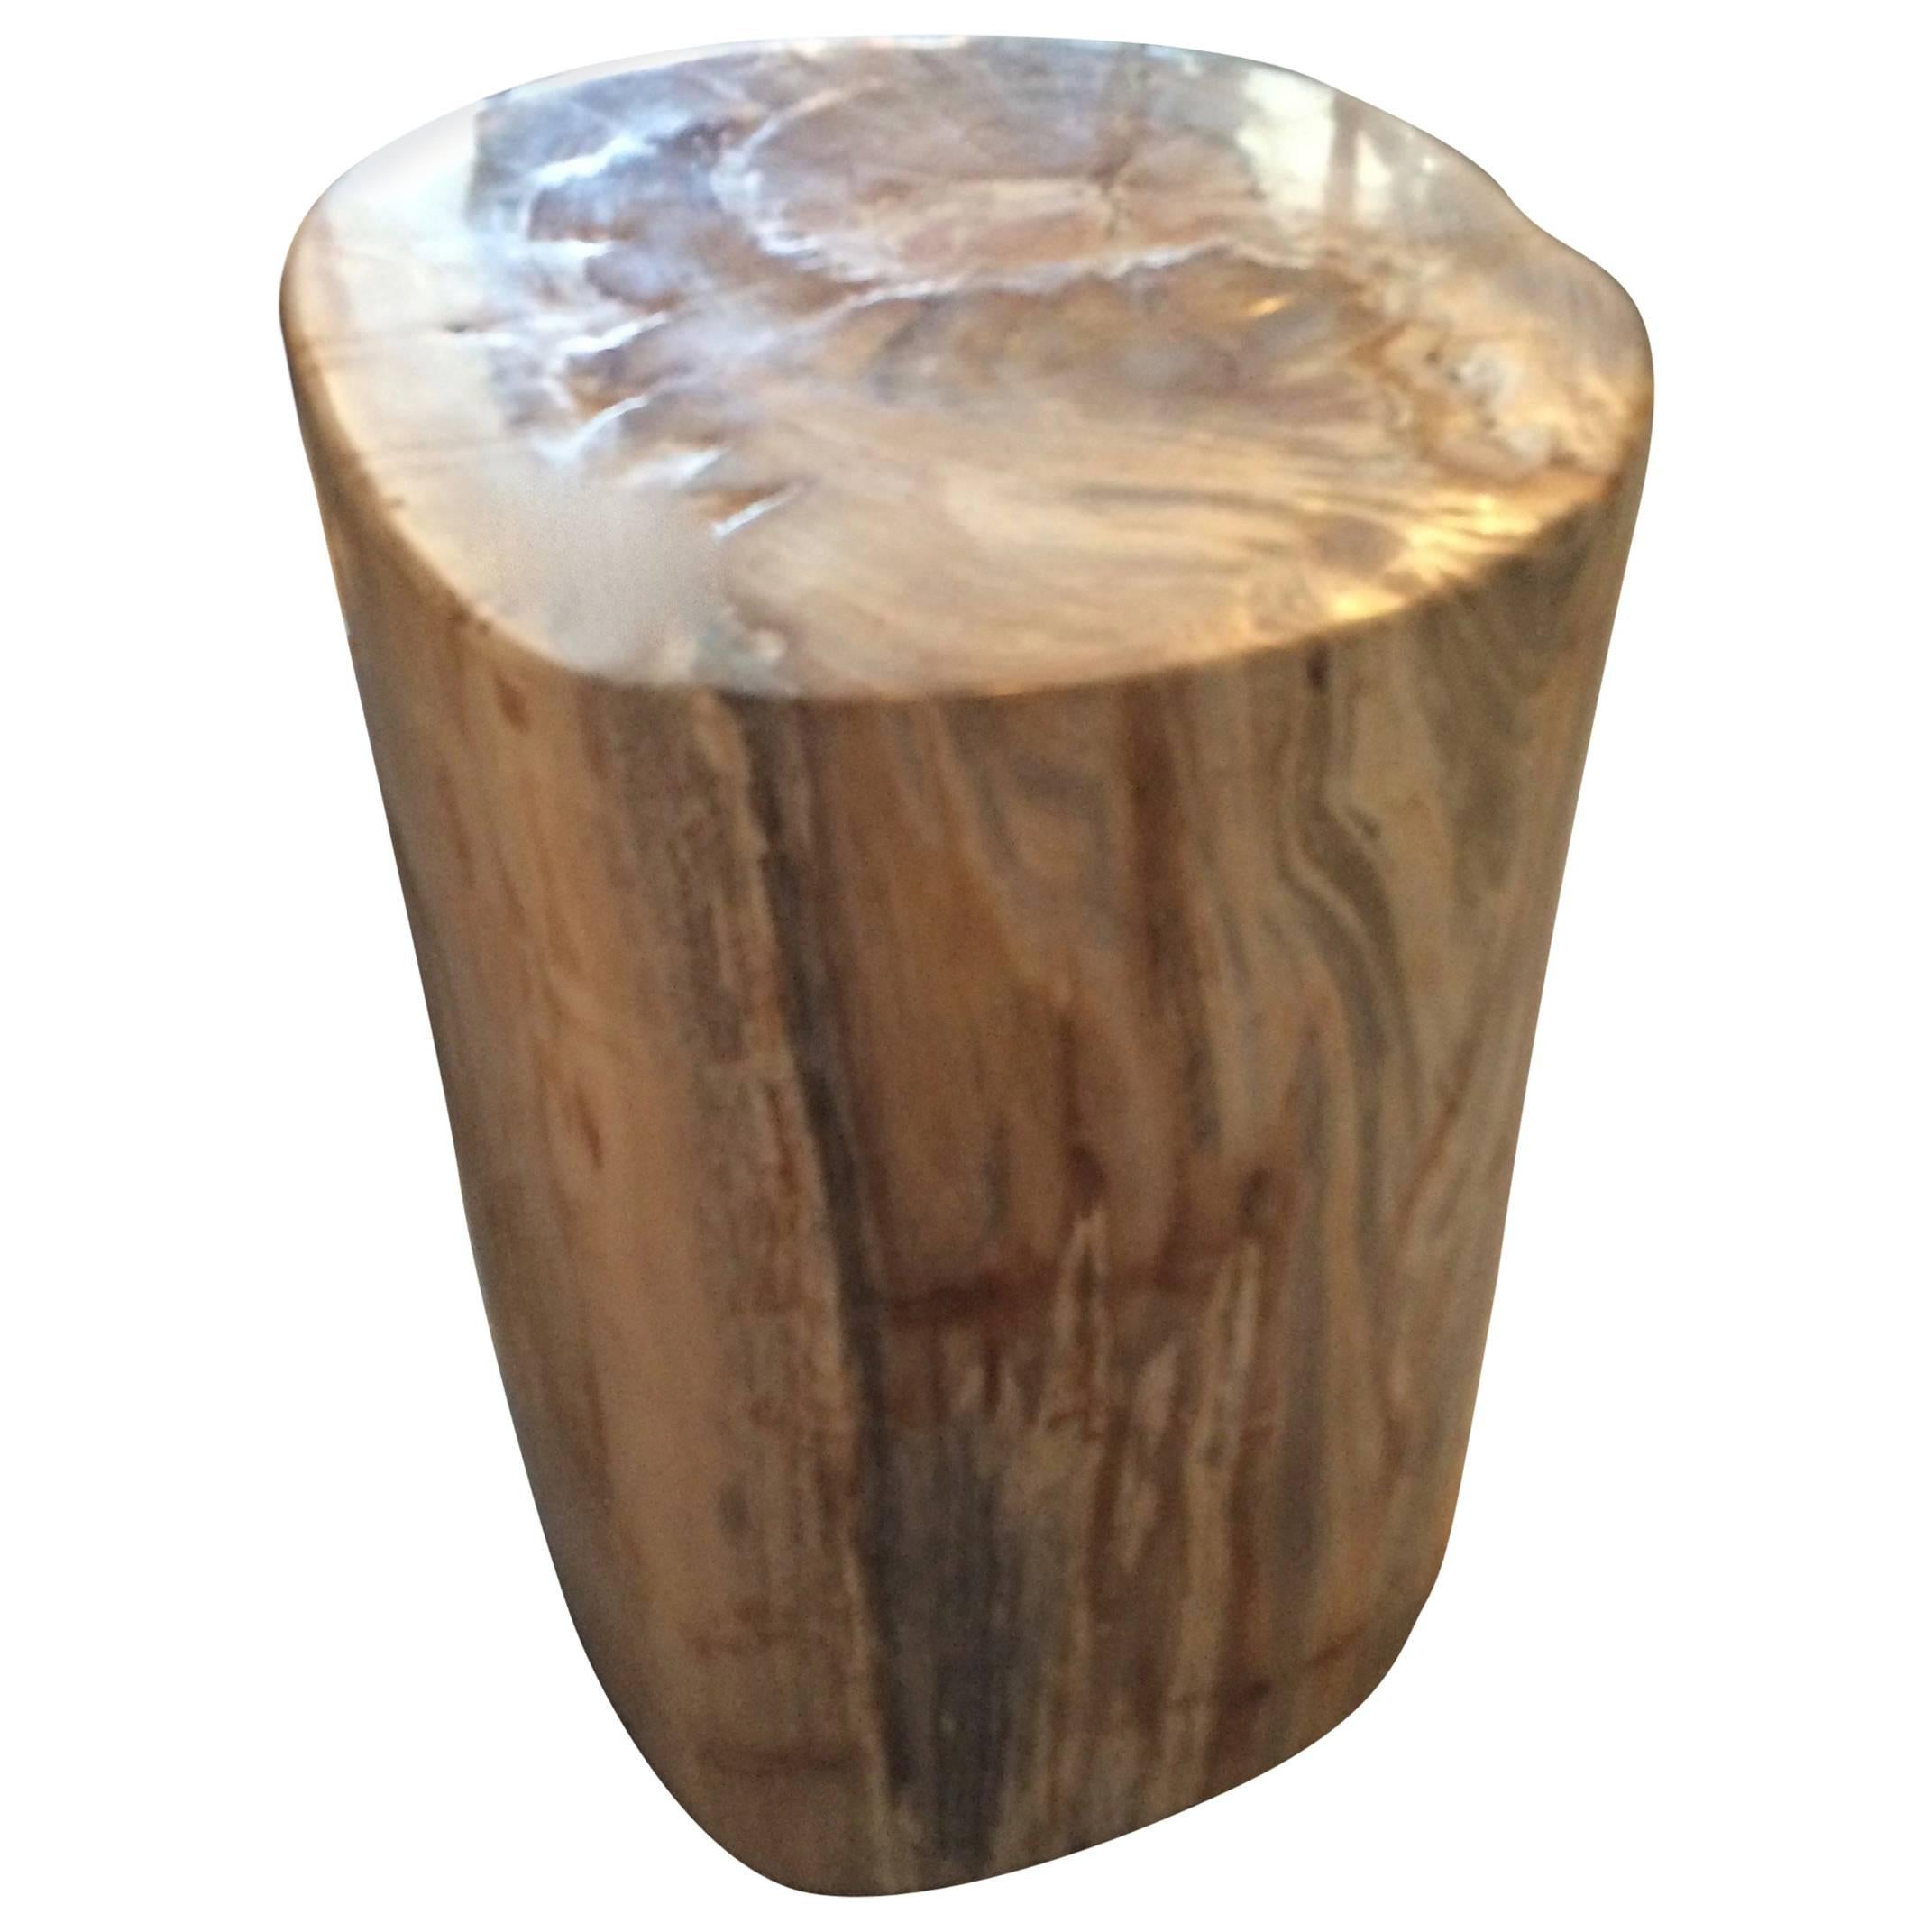 Petrified Wood Side Table or Table Base